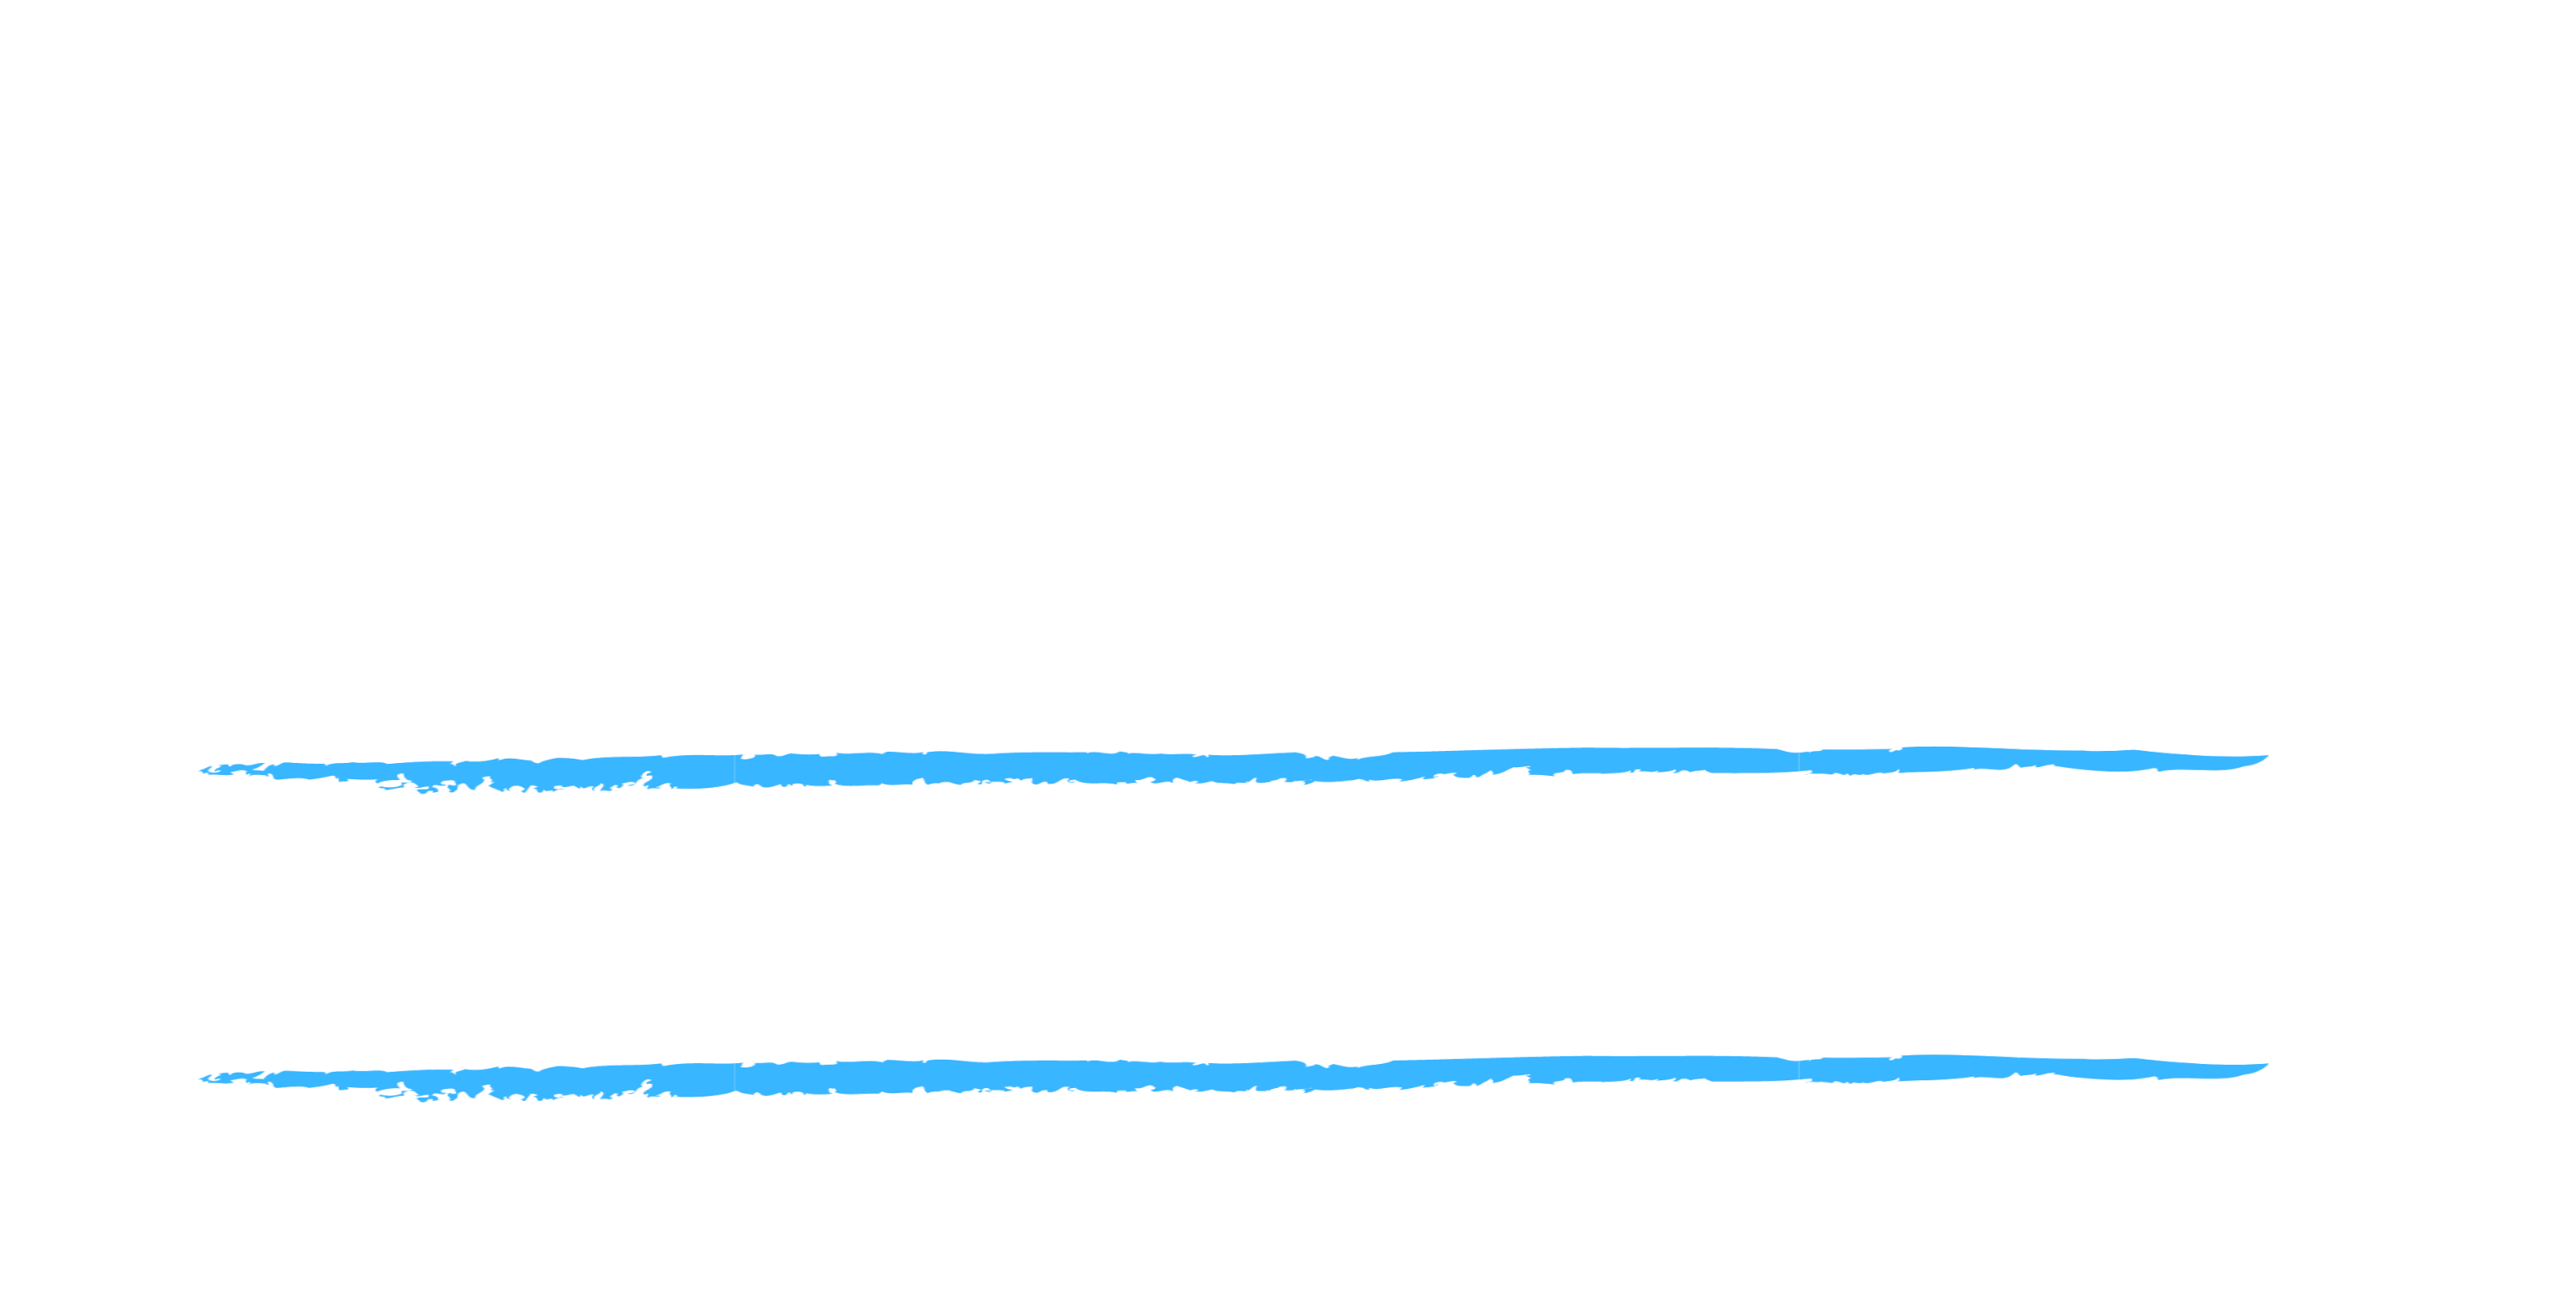 Gardaland Tribe